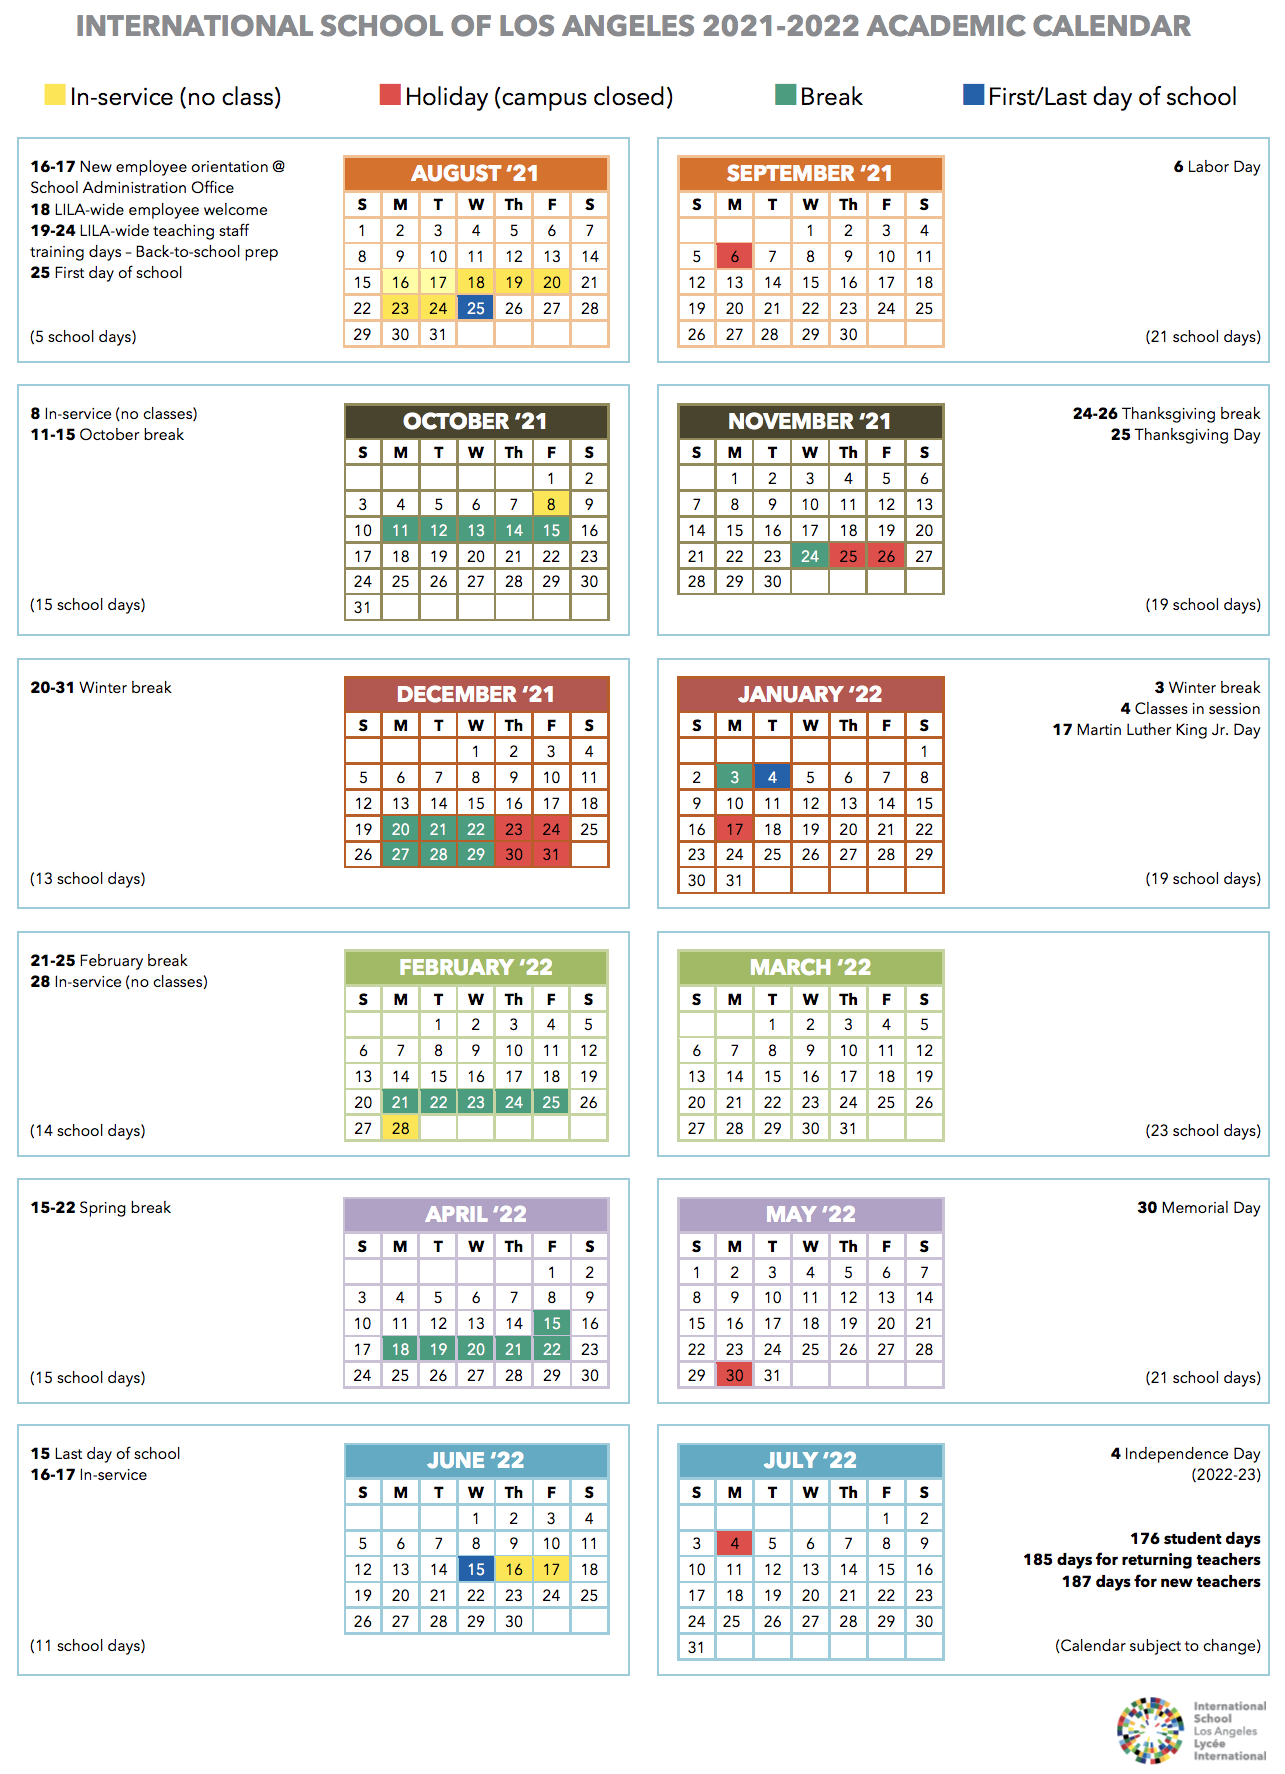 Csulb Academic Calendar 2022 Calendar | International School Of Los Angeles